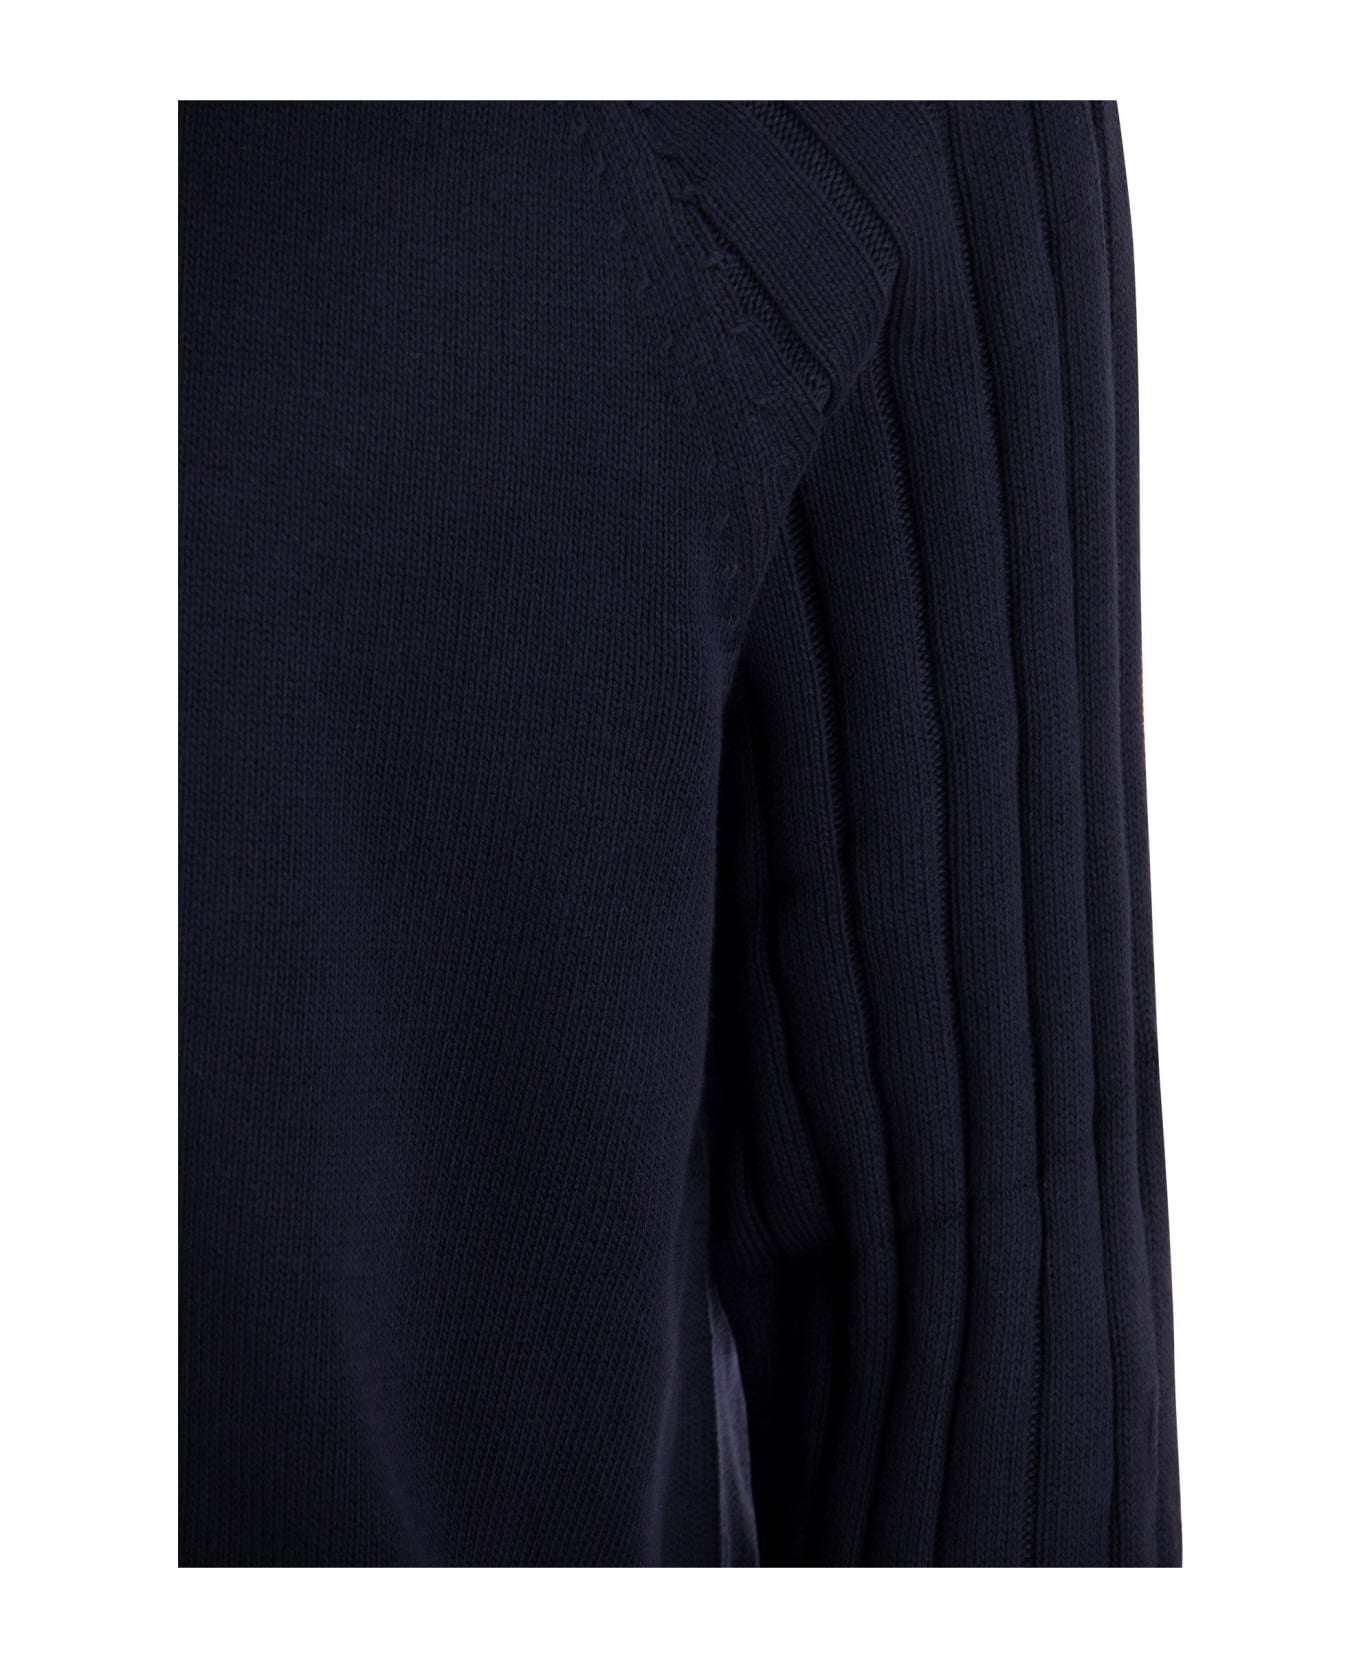 Brunello Cucinelli Crew-neck Sweater With Raglan Sleeve - Blue